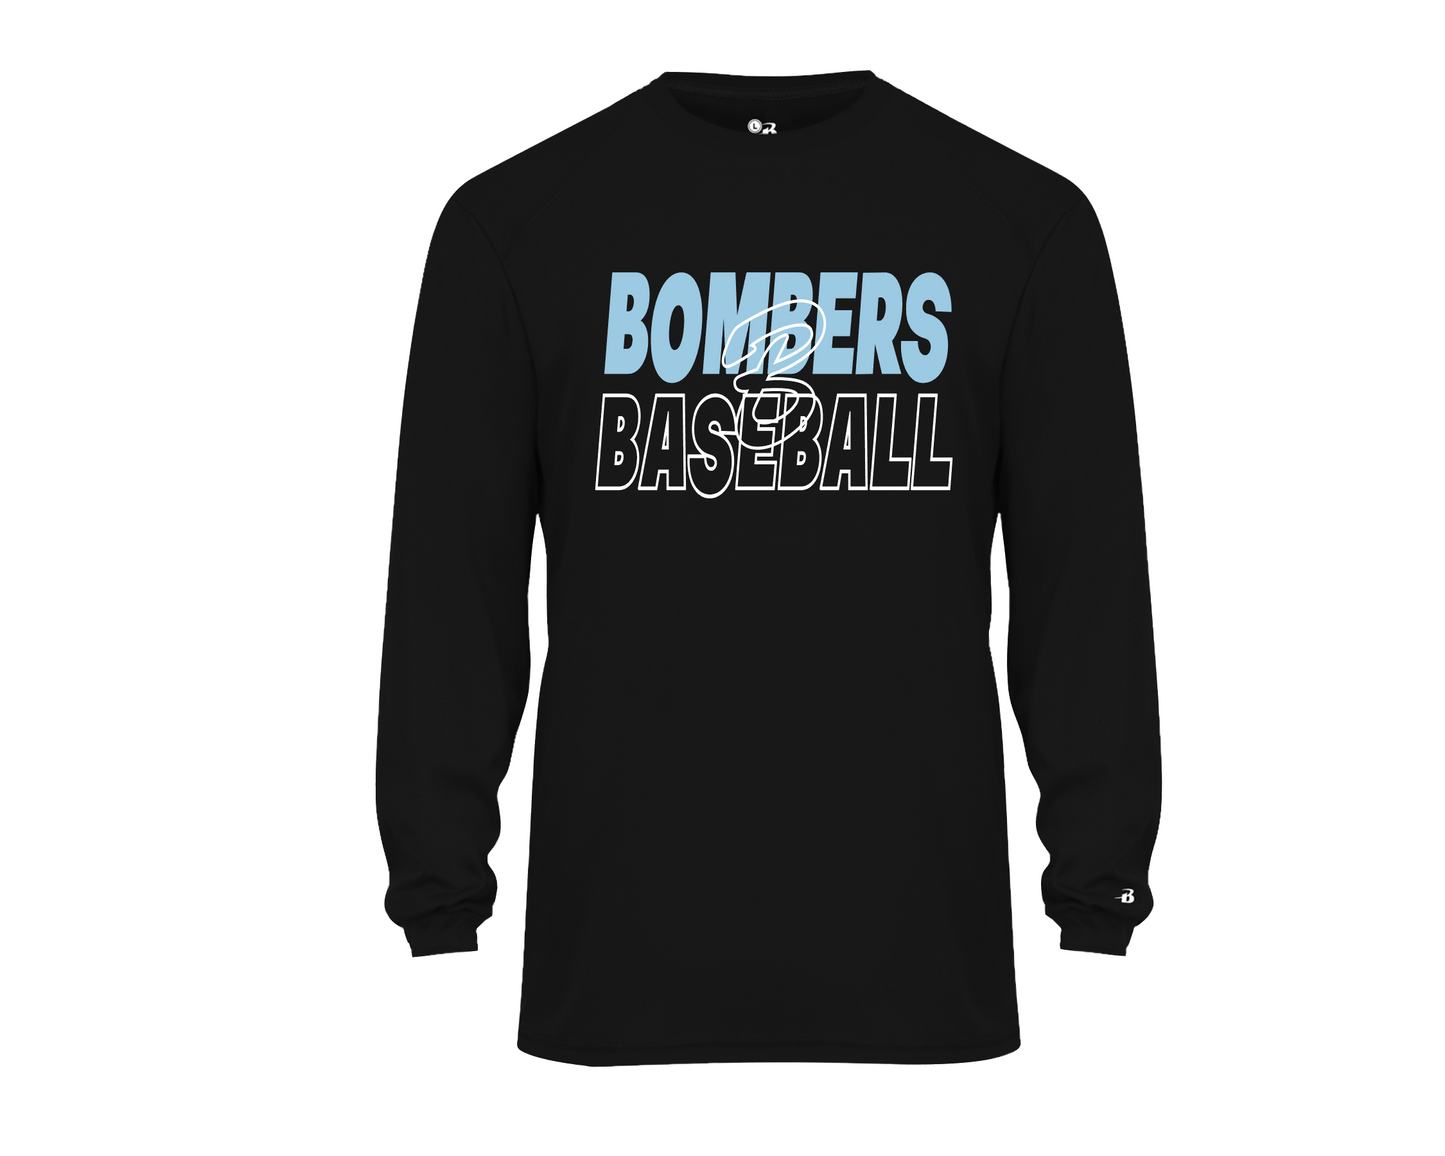 Black Bombers Baseball Shirt, Georgetown Bombers Tee, Drifit Bombers Baseball TShirt